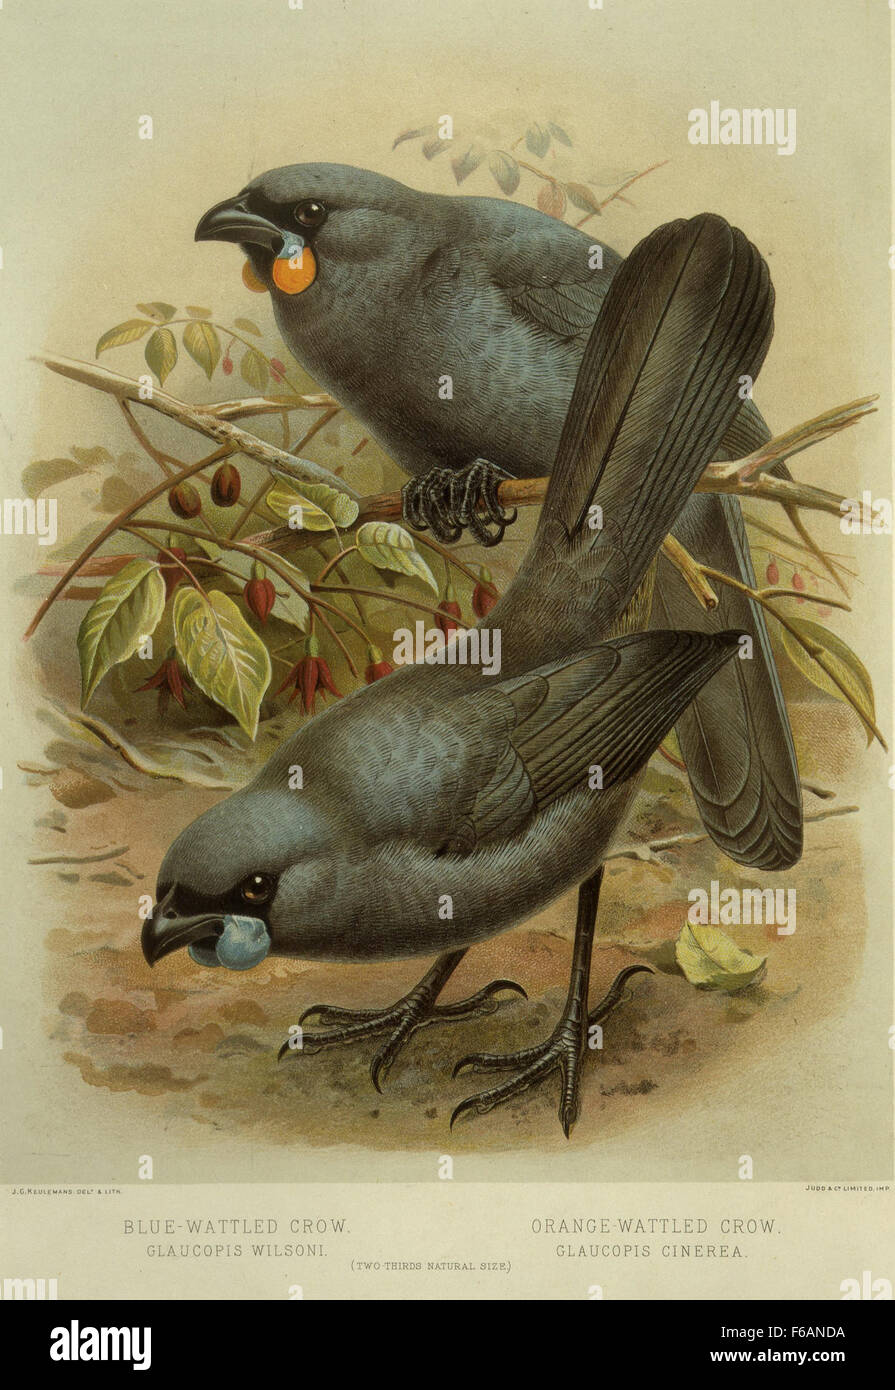 Keulemans, John Gerrard 1842-1912 Blu-wattled crow, Glaucopis wilsoni arancio-wattled crow, Foto Stock